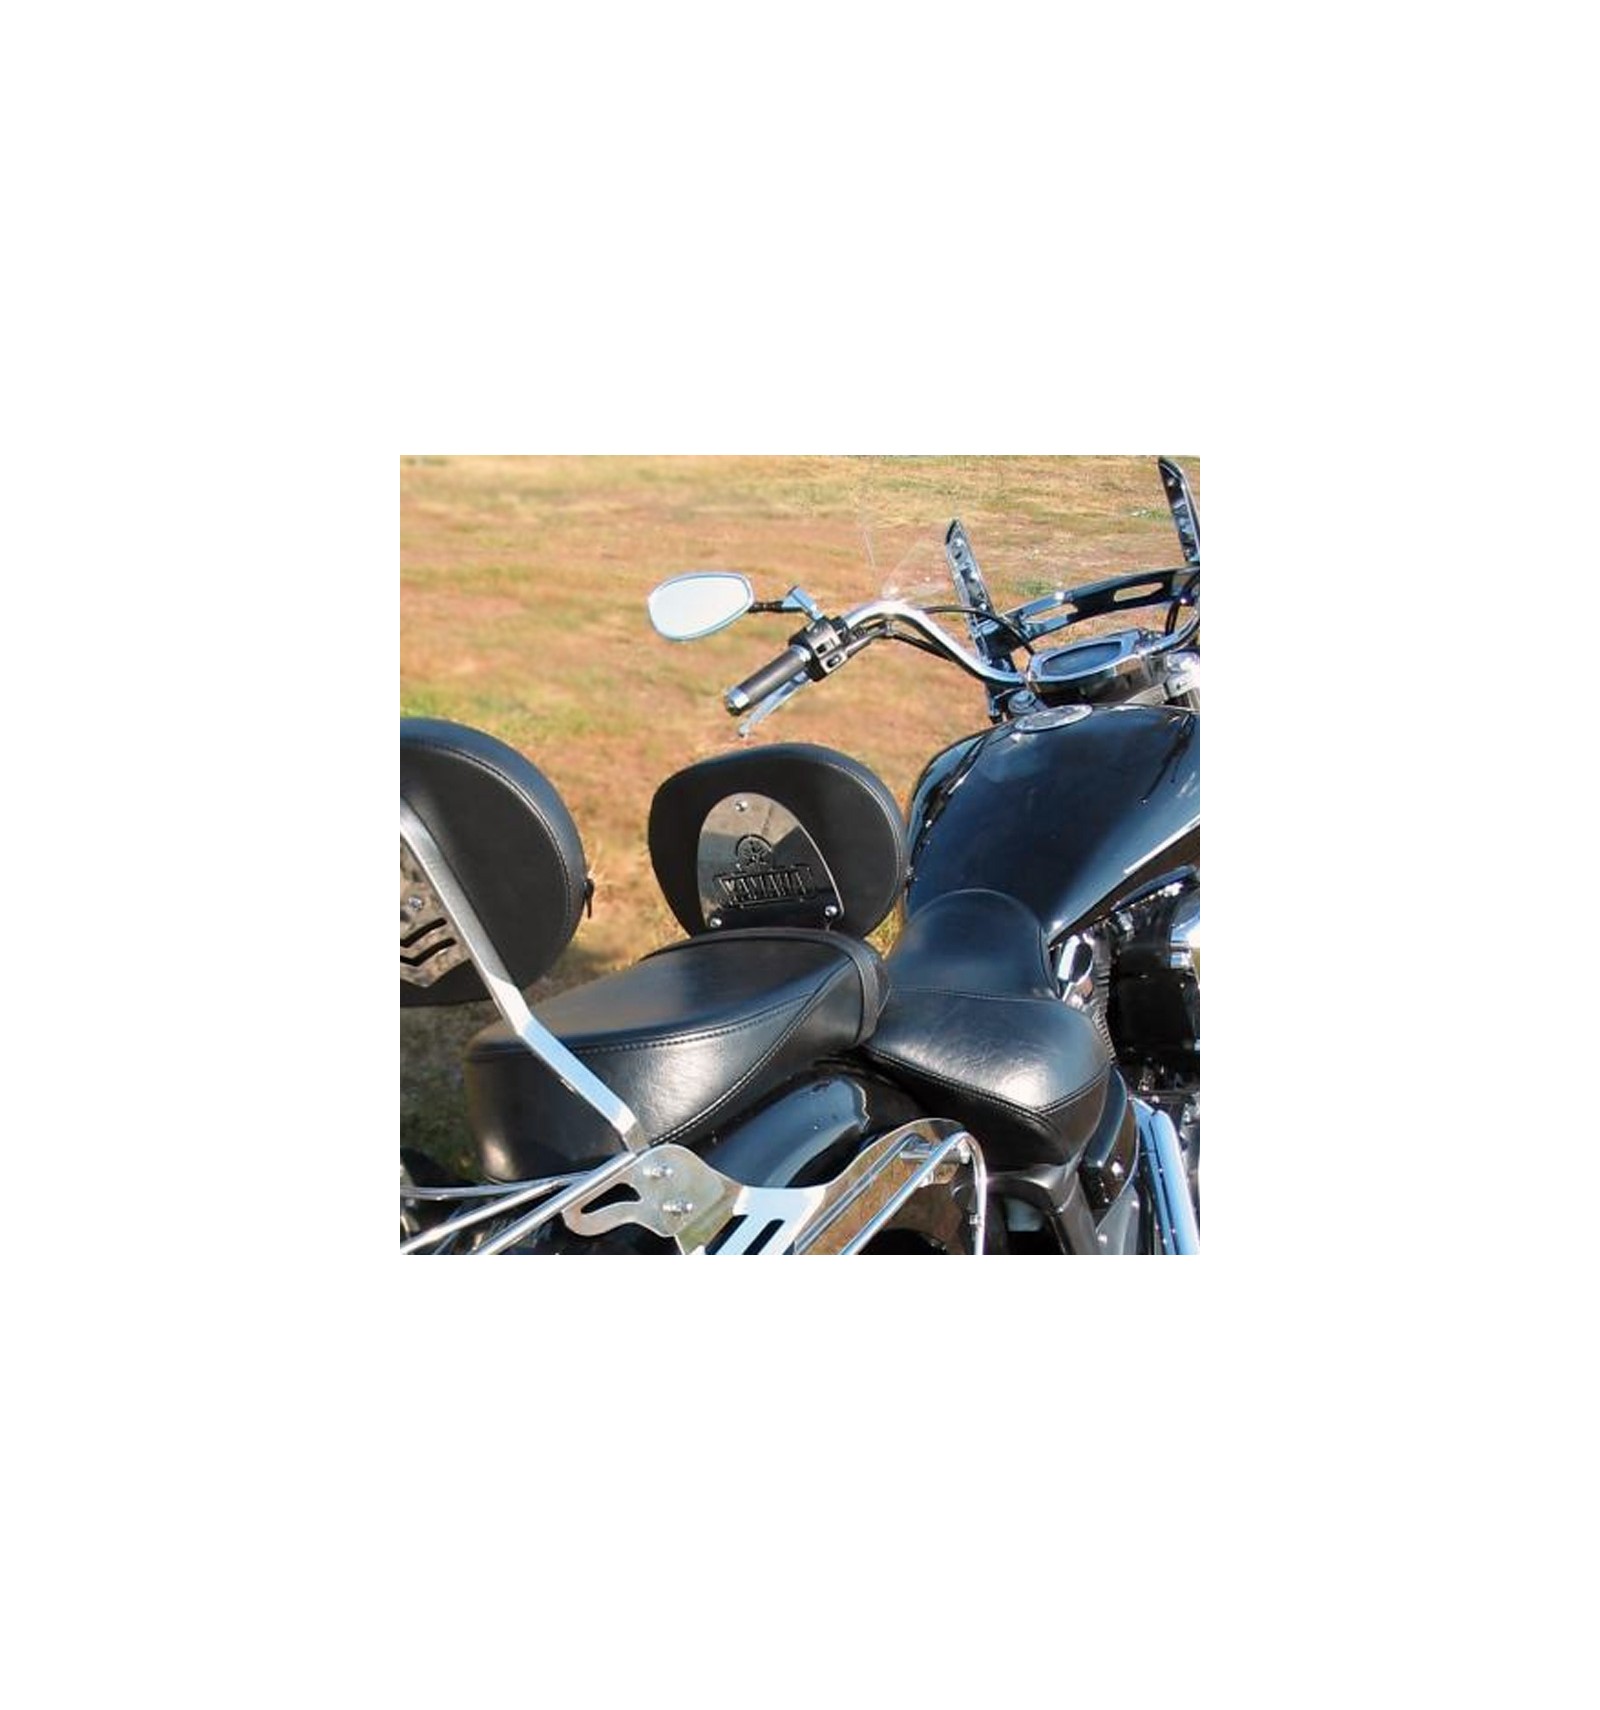 XVS950 | 1300 V Star XVS1300A Midnight Star Heavy Chrome Rider Adjustable Driver Support Rider Backrest BM UK Yamaha XVS950A